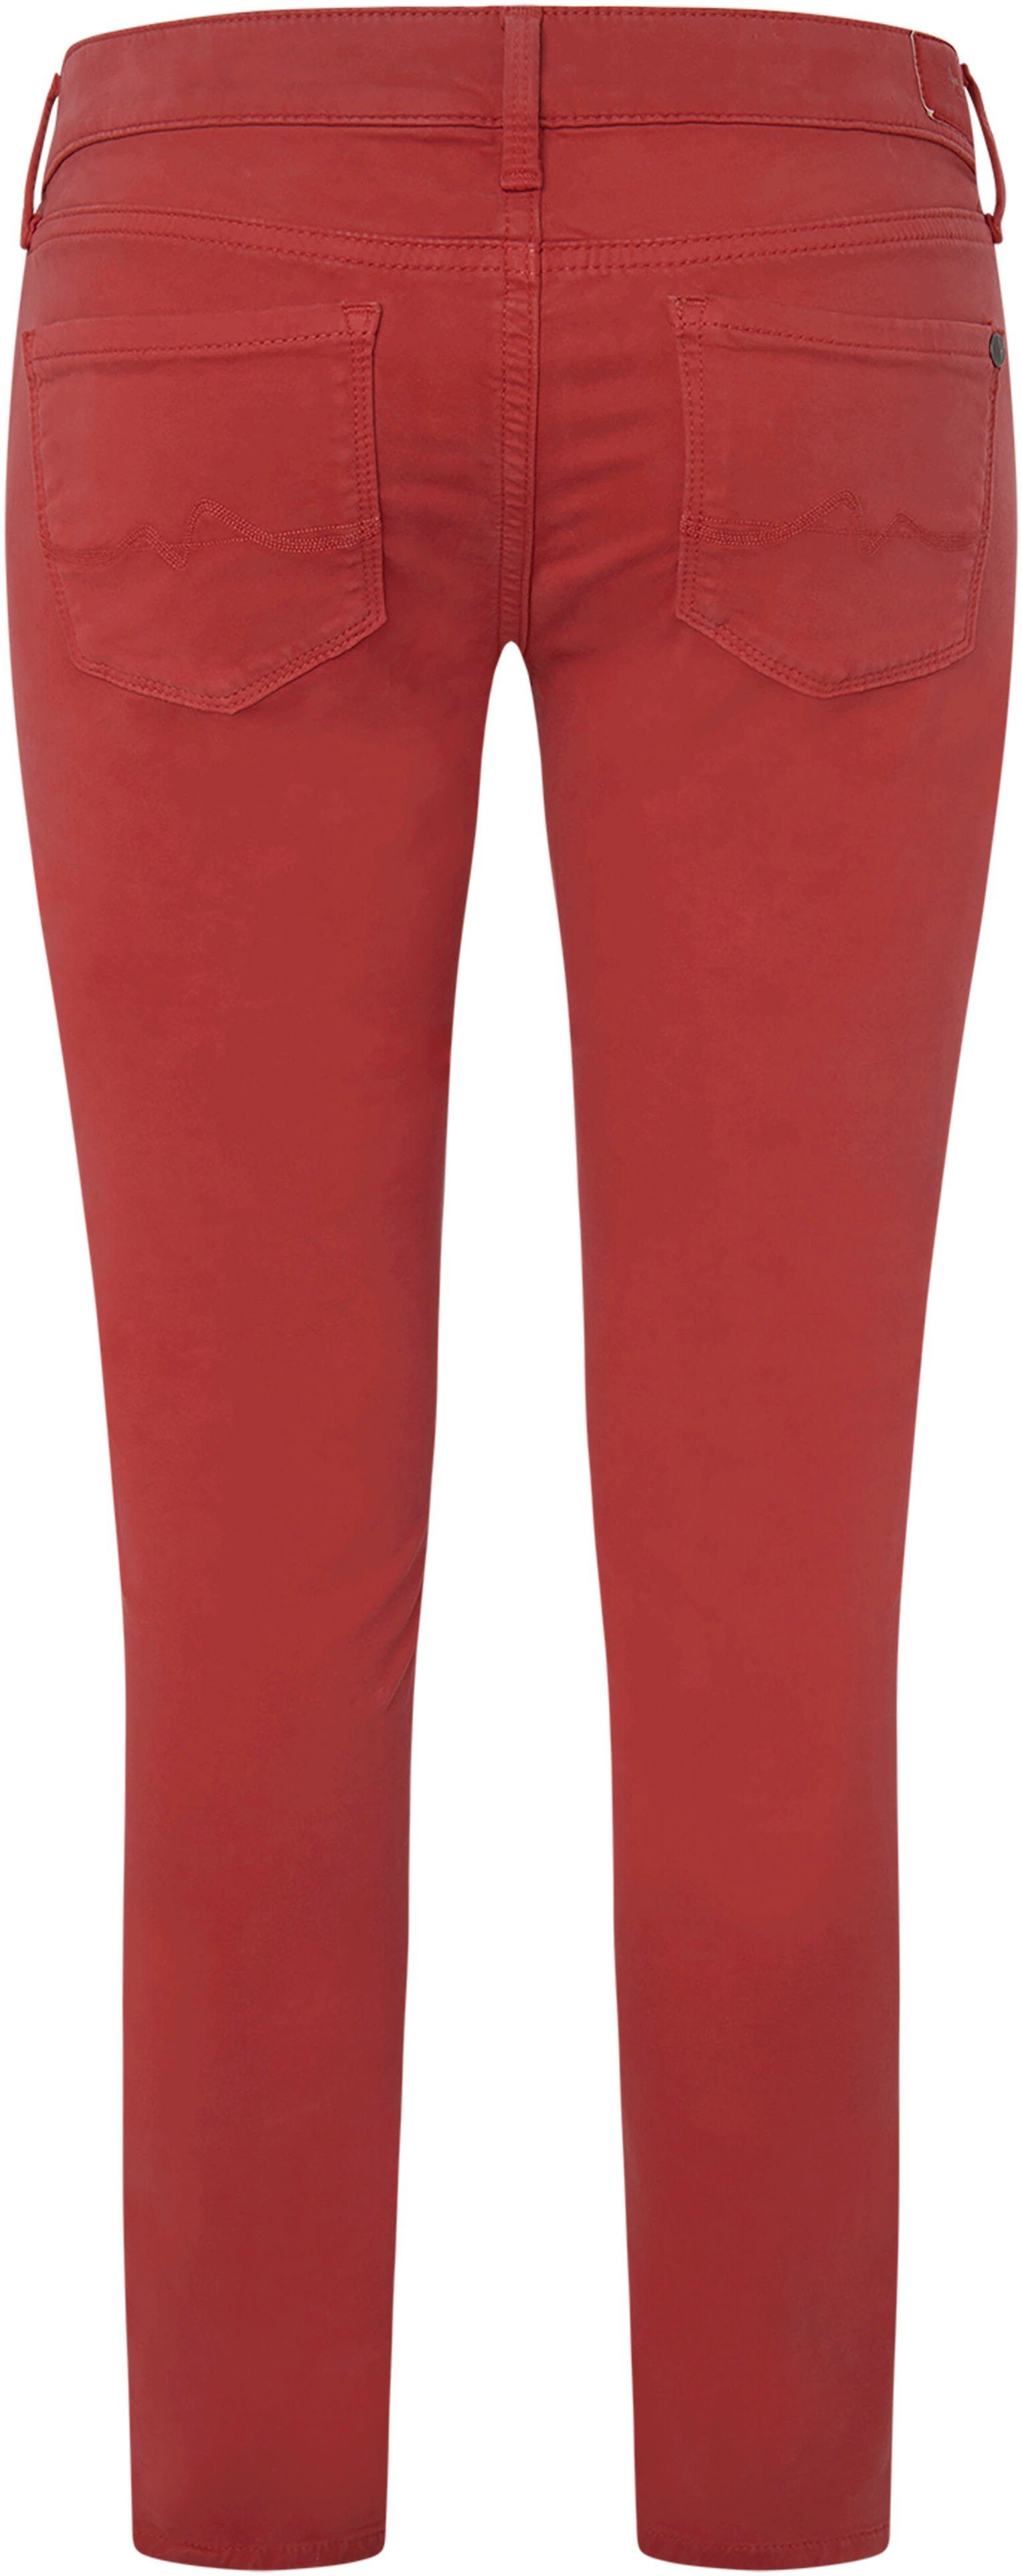 Pepe Soho 5-Pocket-Hose red Jeans studio Skinny